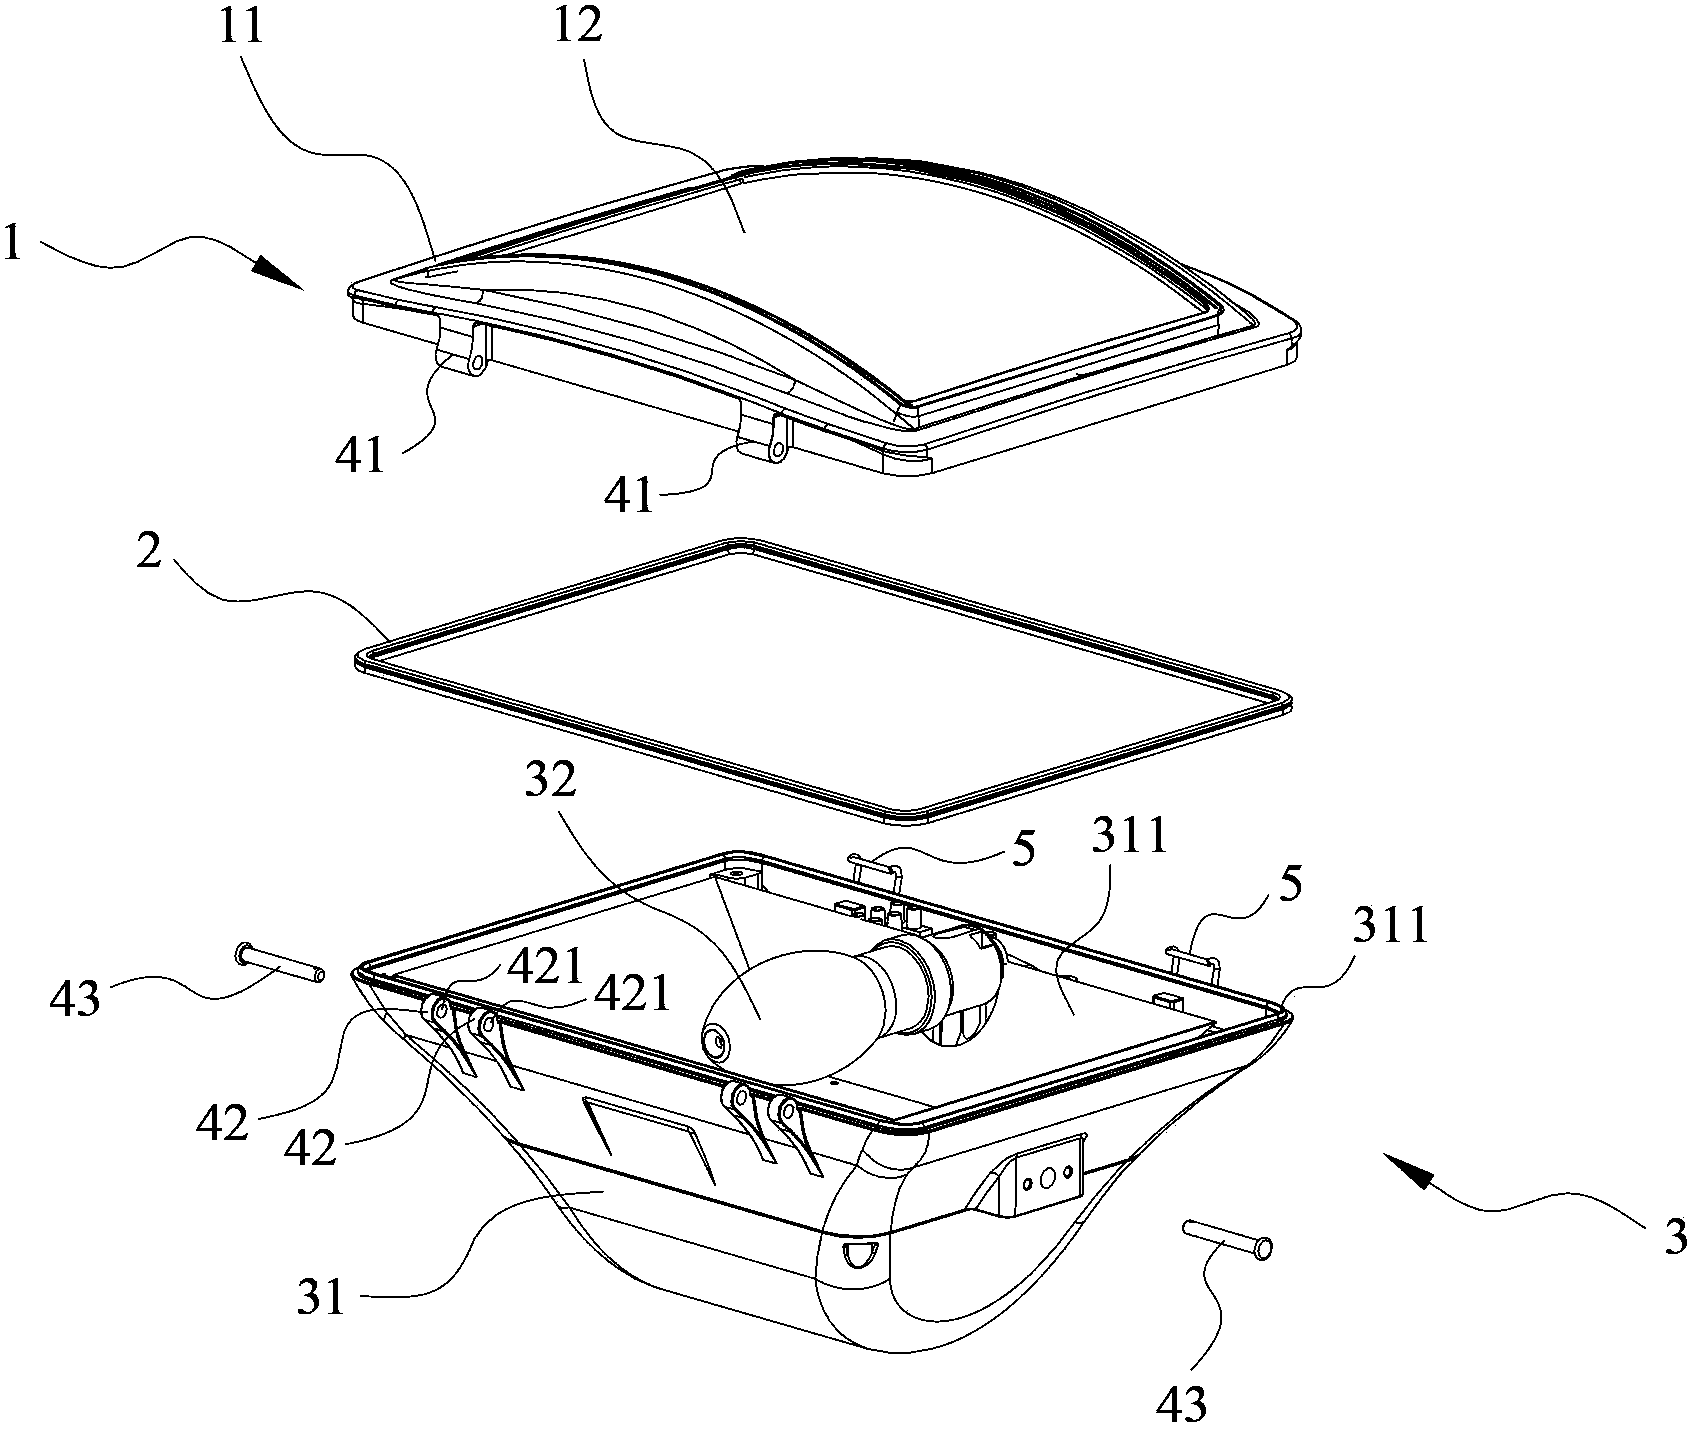 Sealing ring of lamp and lamp